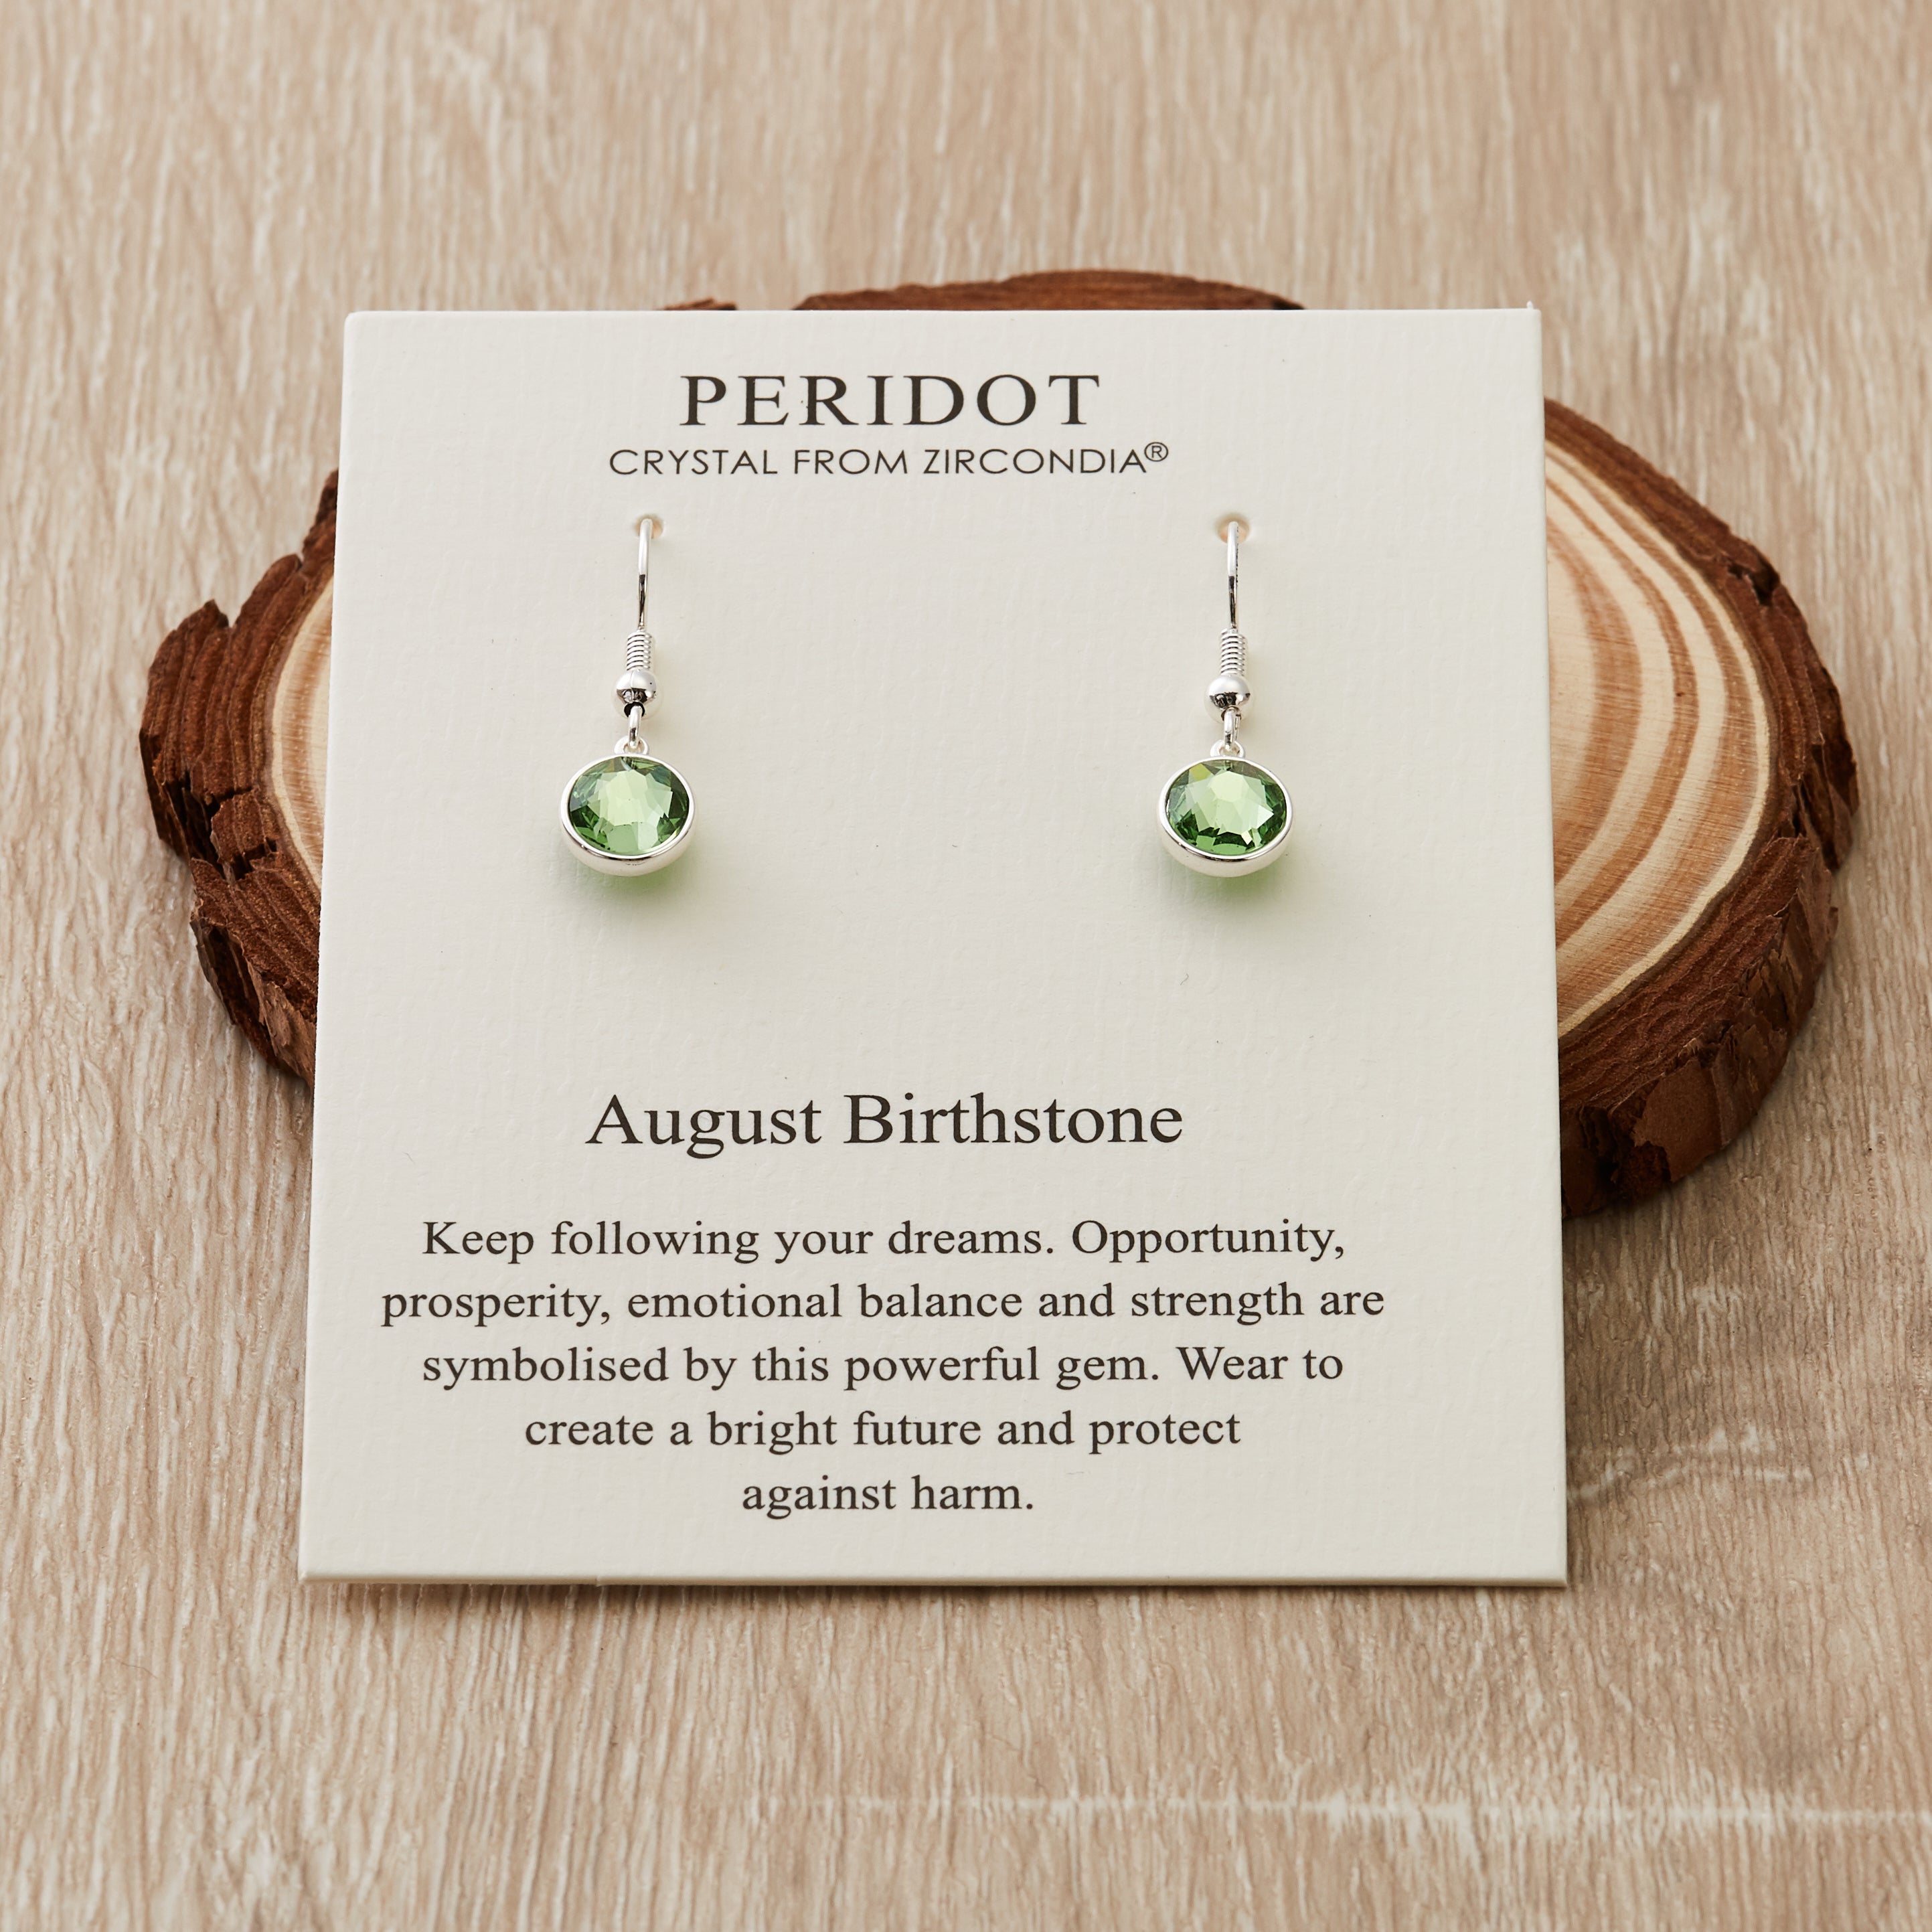 August Birthstone Drop Earrings Created with Peridot Zircondia® Crystals